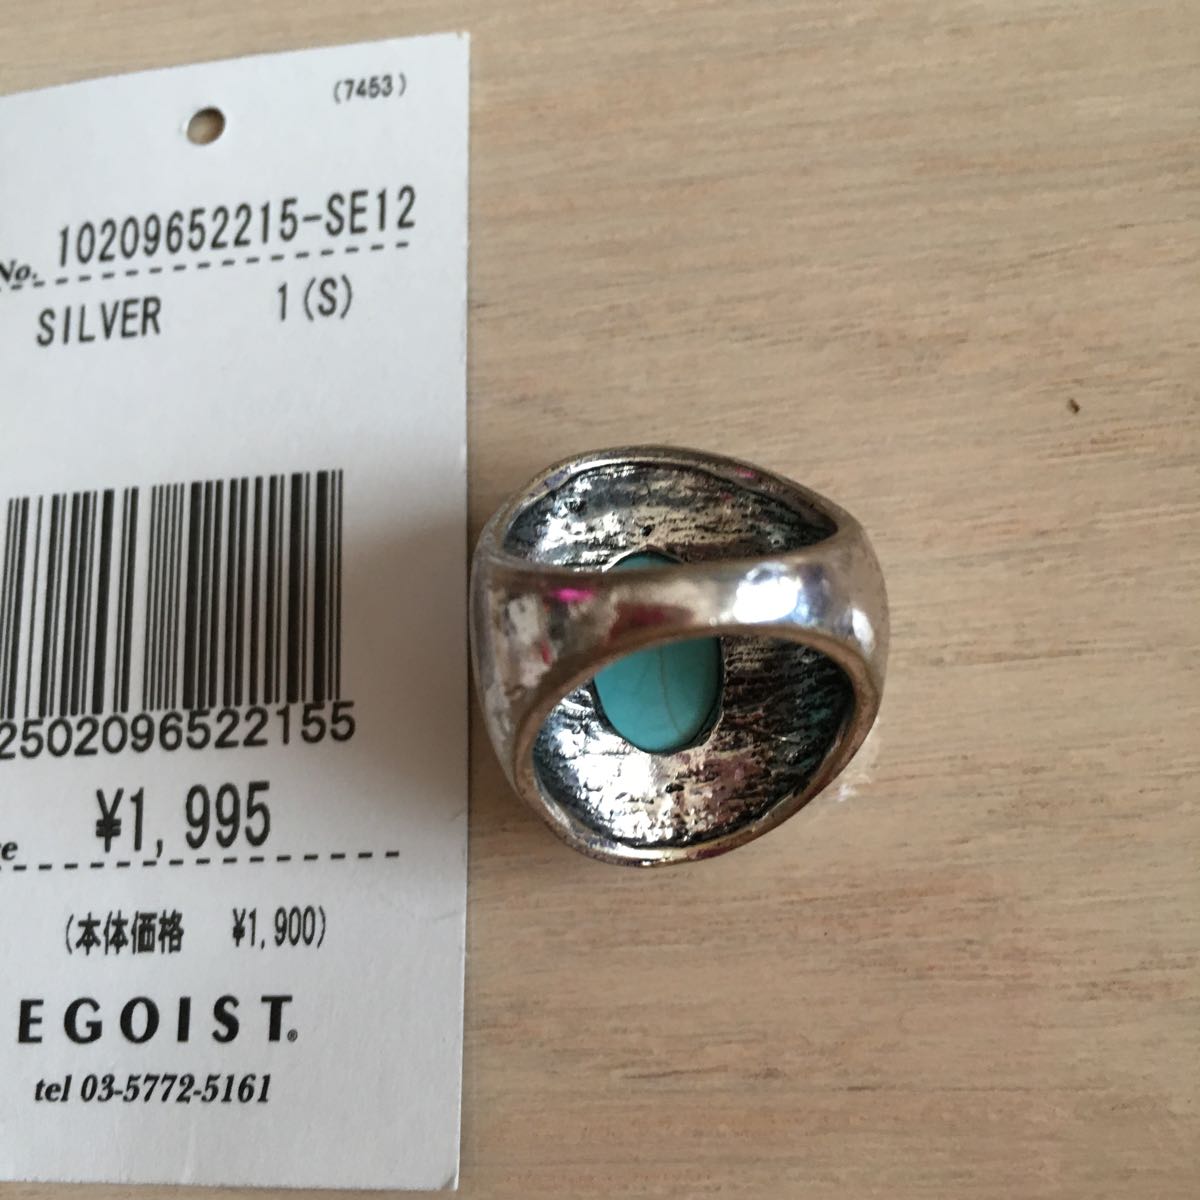 EGOIST Egoist ring silver size 1(S) regular price 1995 jpy 